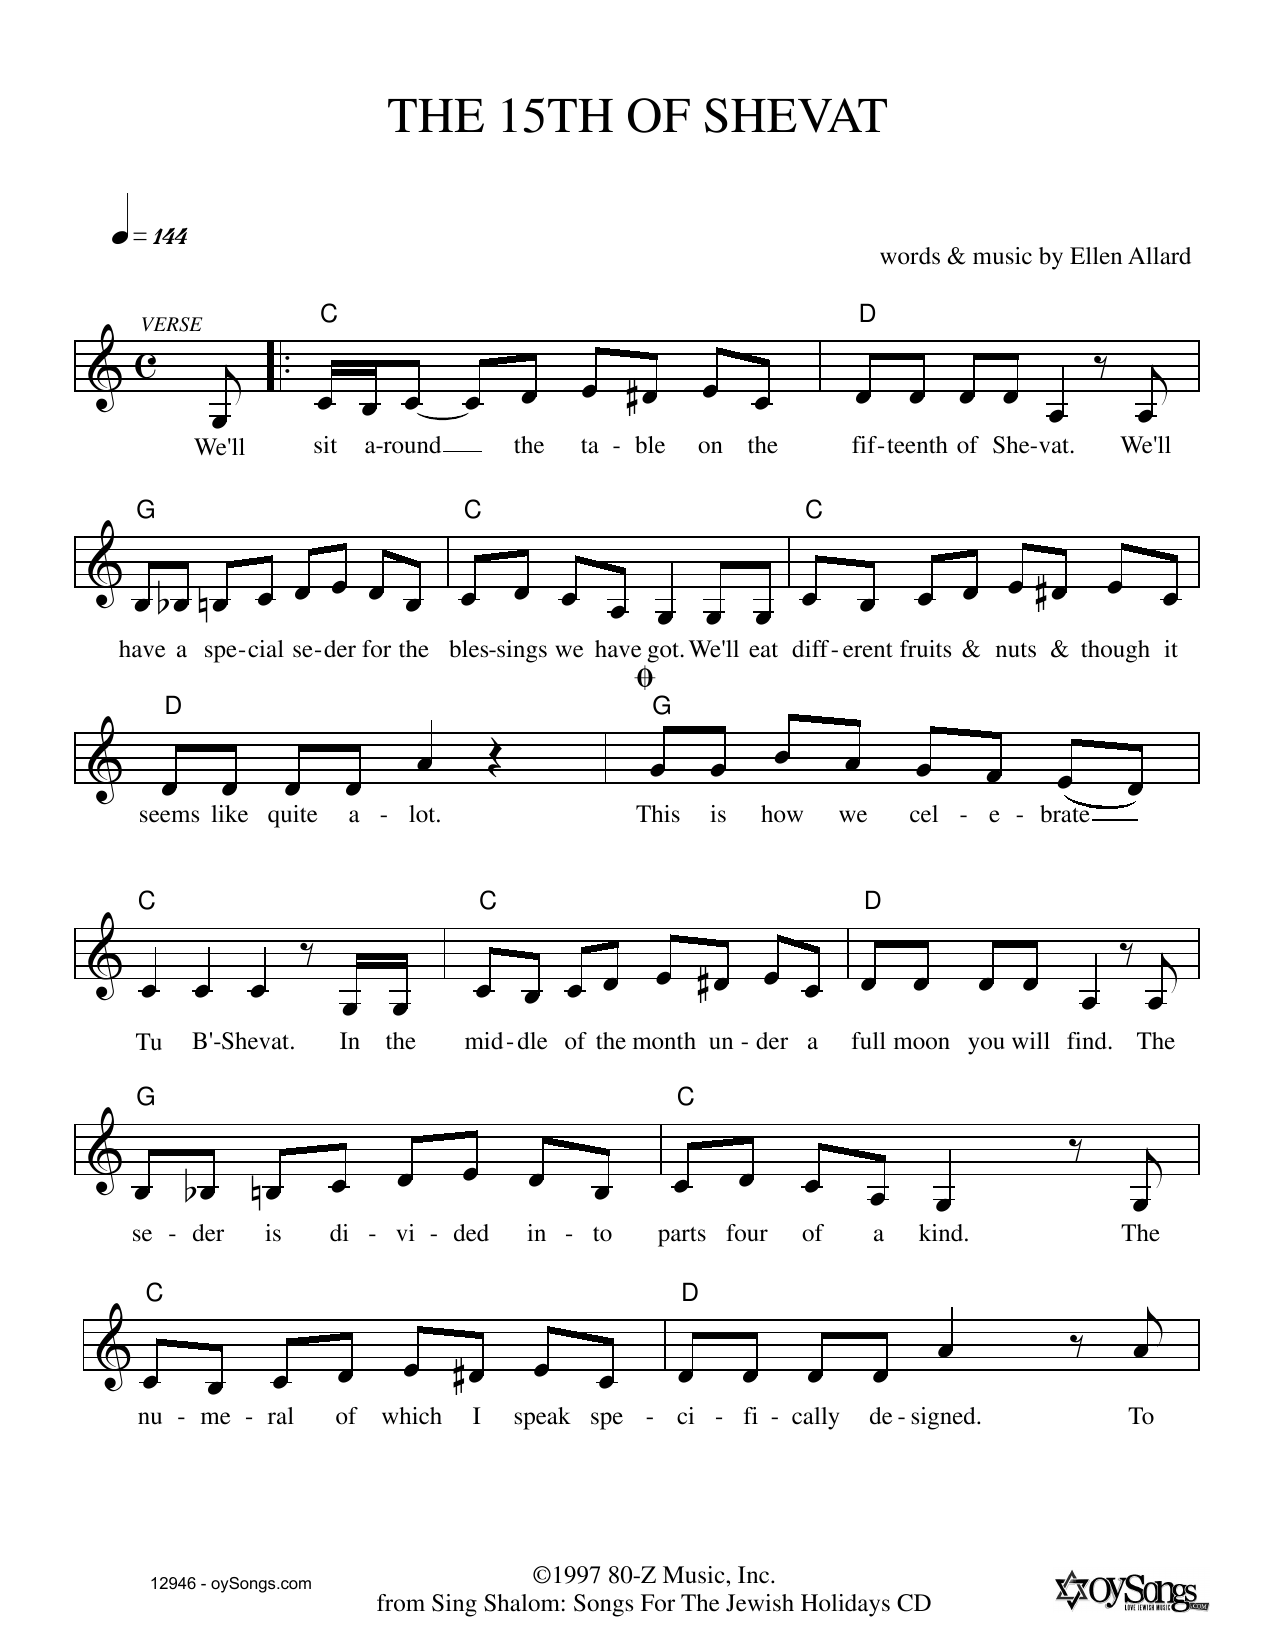 Ellen Allard Fifteenth Of Shevat Sheet Music Notes & Chords for Melody Line, Lyrics & Chords - Download or Print PDF